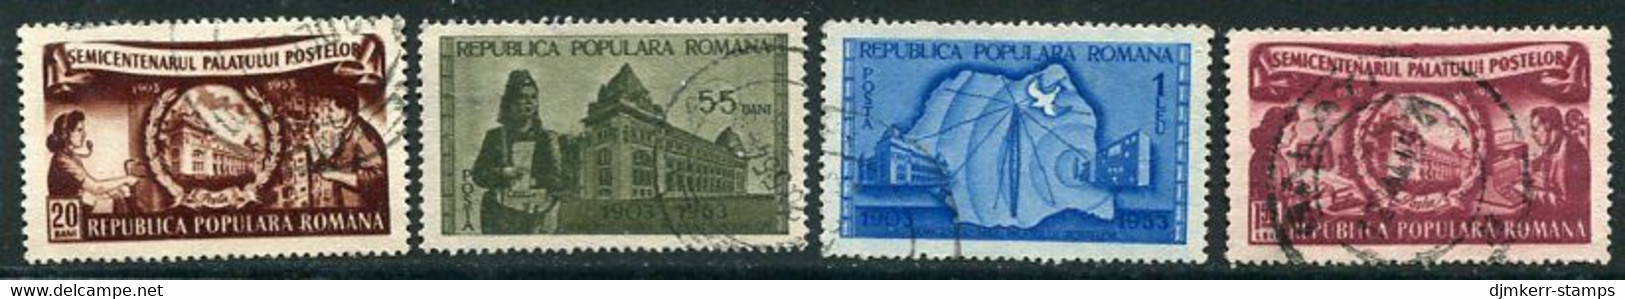 ROMANIA 1953 Post Office Building Used.  Michel 1445-48 - Gebruikt